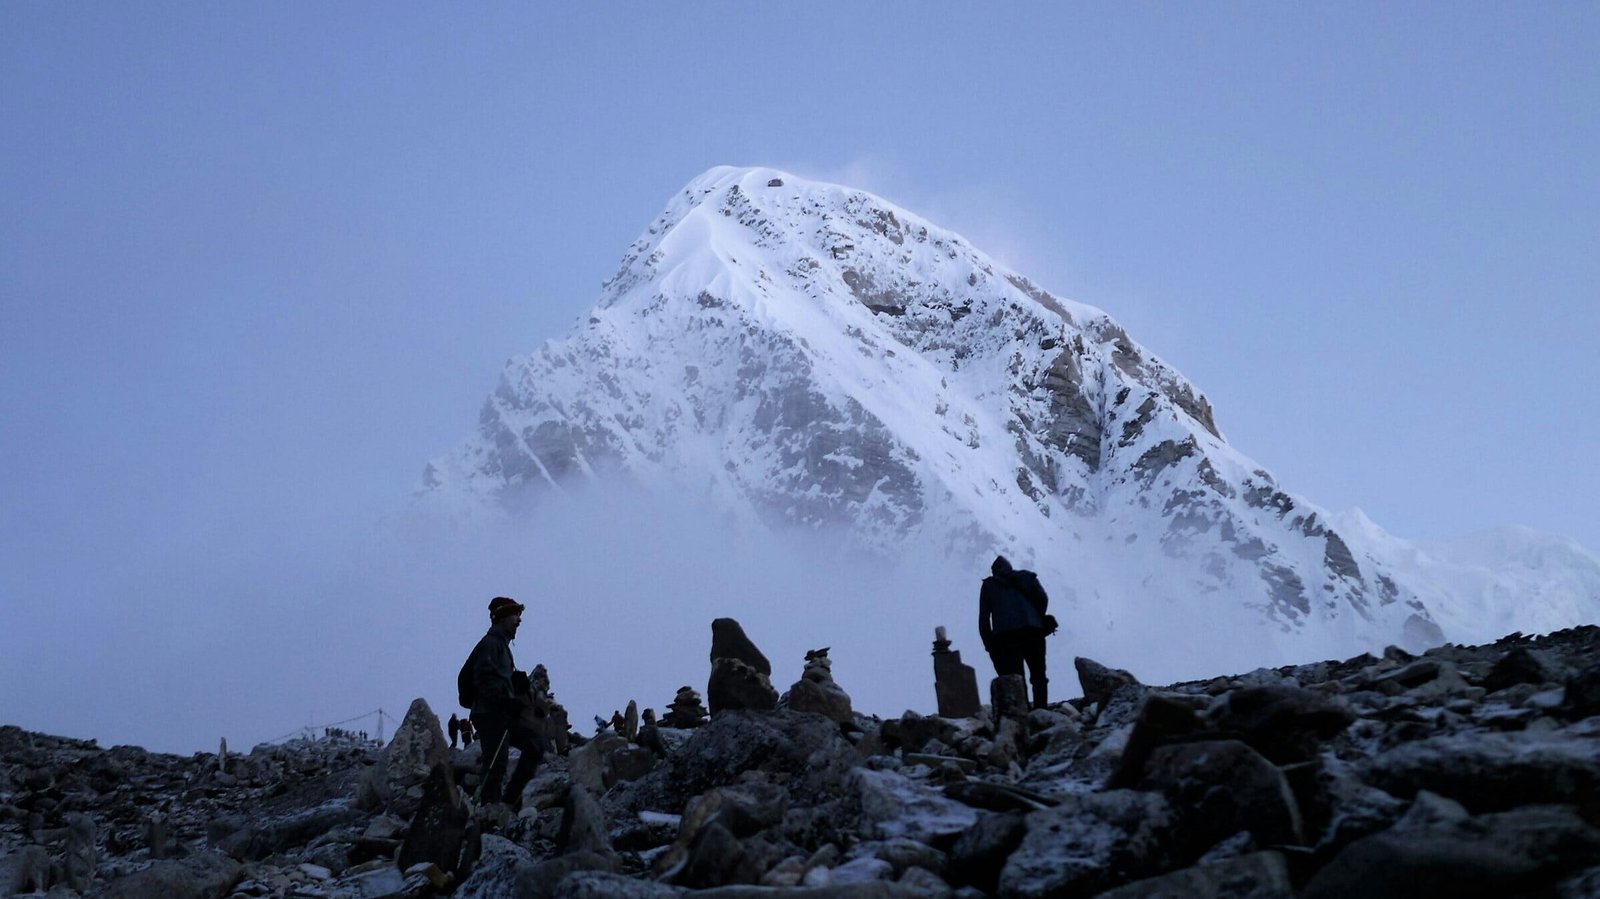 Mount Everest - Highest Mountain